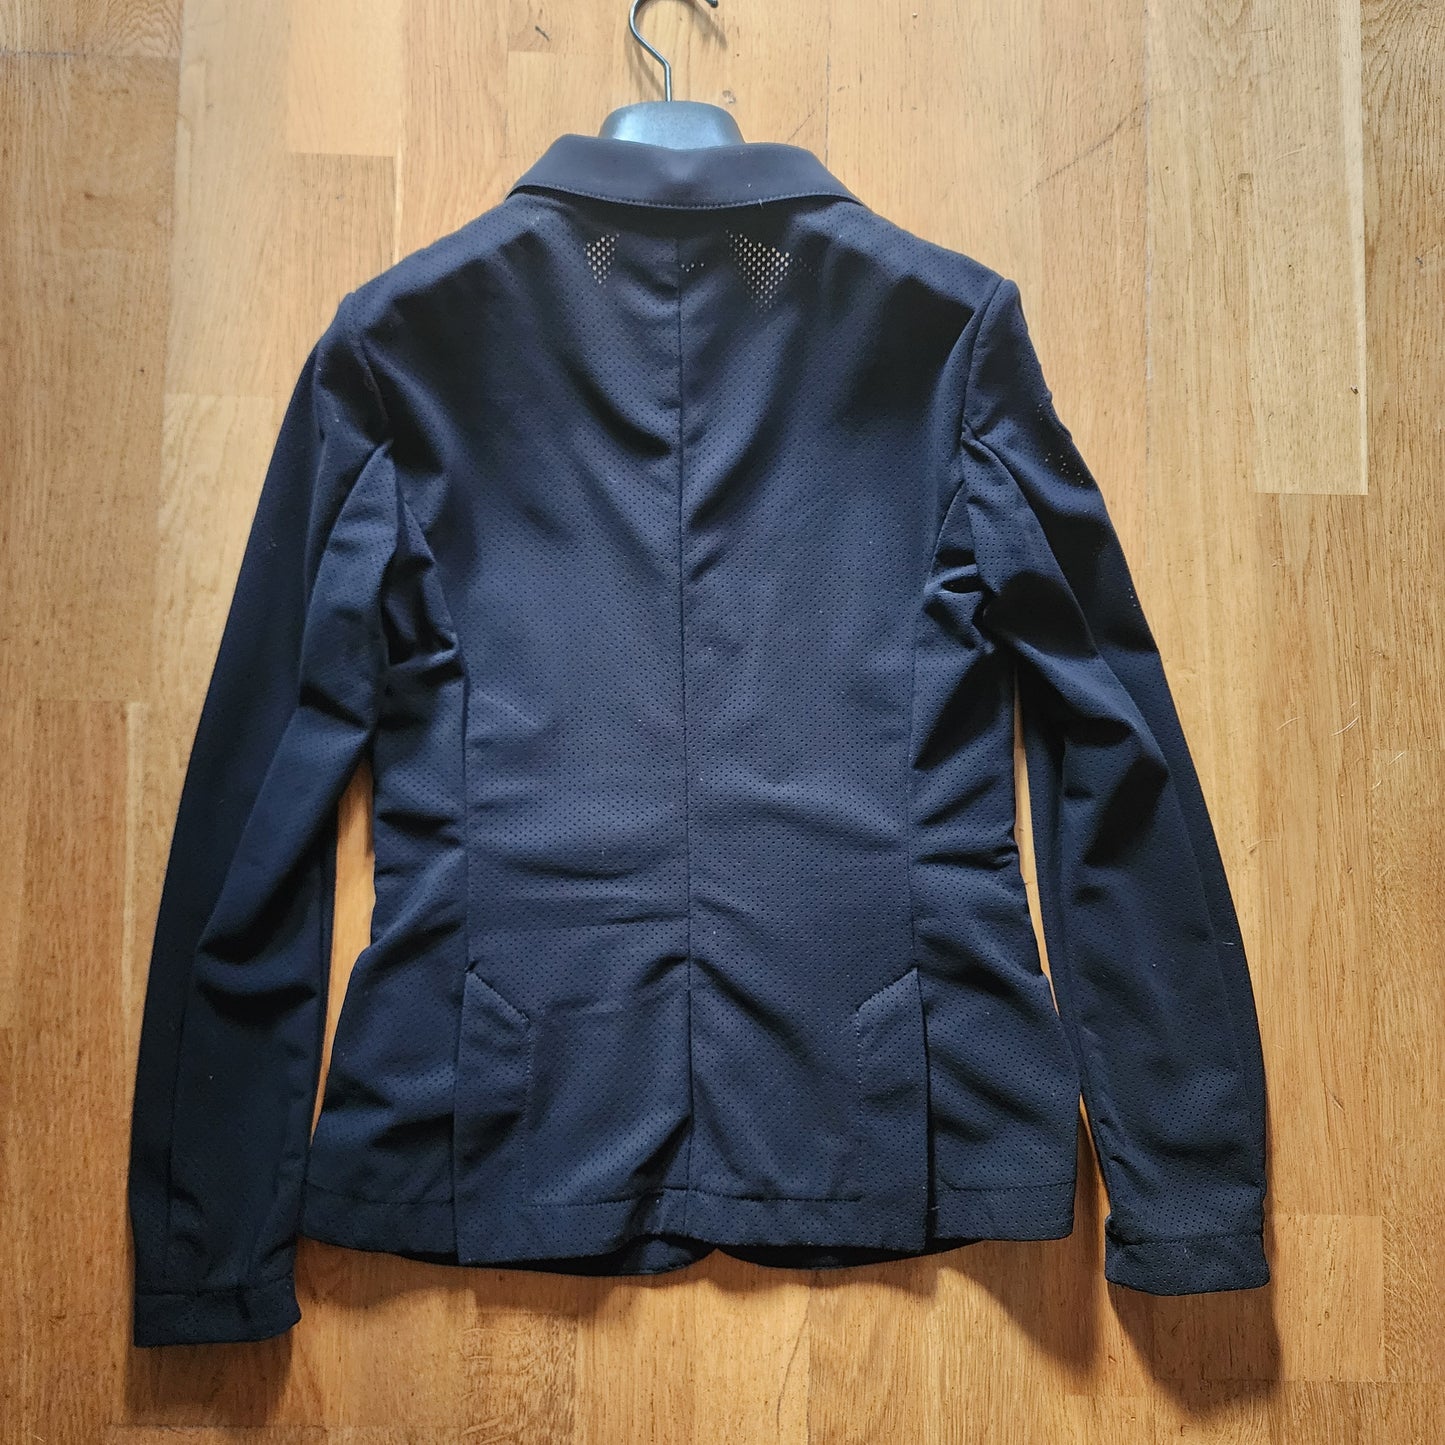 Cavalleria Toscana black Perforated (mesh) show jacket, ladies 6 to 8